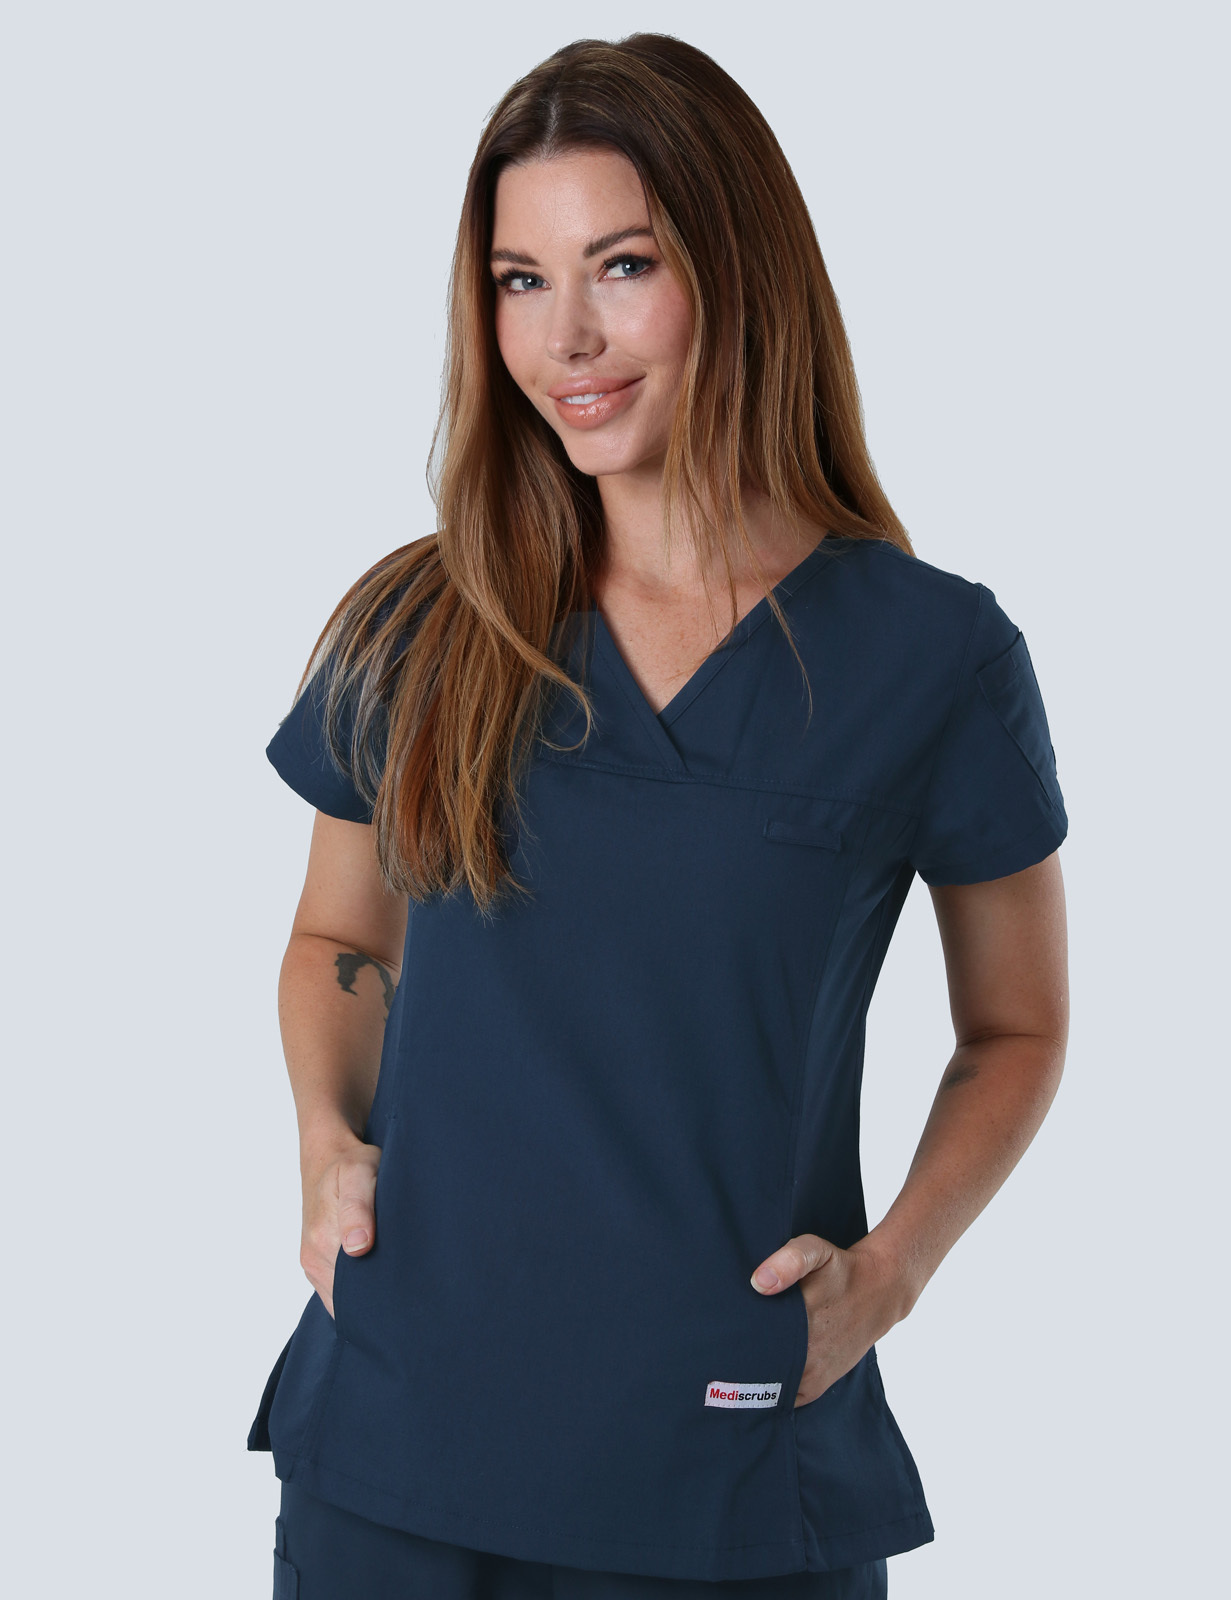 Ipswich Hospital Nurse - Ward 7B Uniform Set Bundle (Women's Fit Solid Top and Cargo Pants in Navy incl Logos)